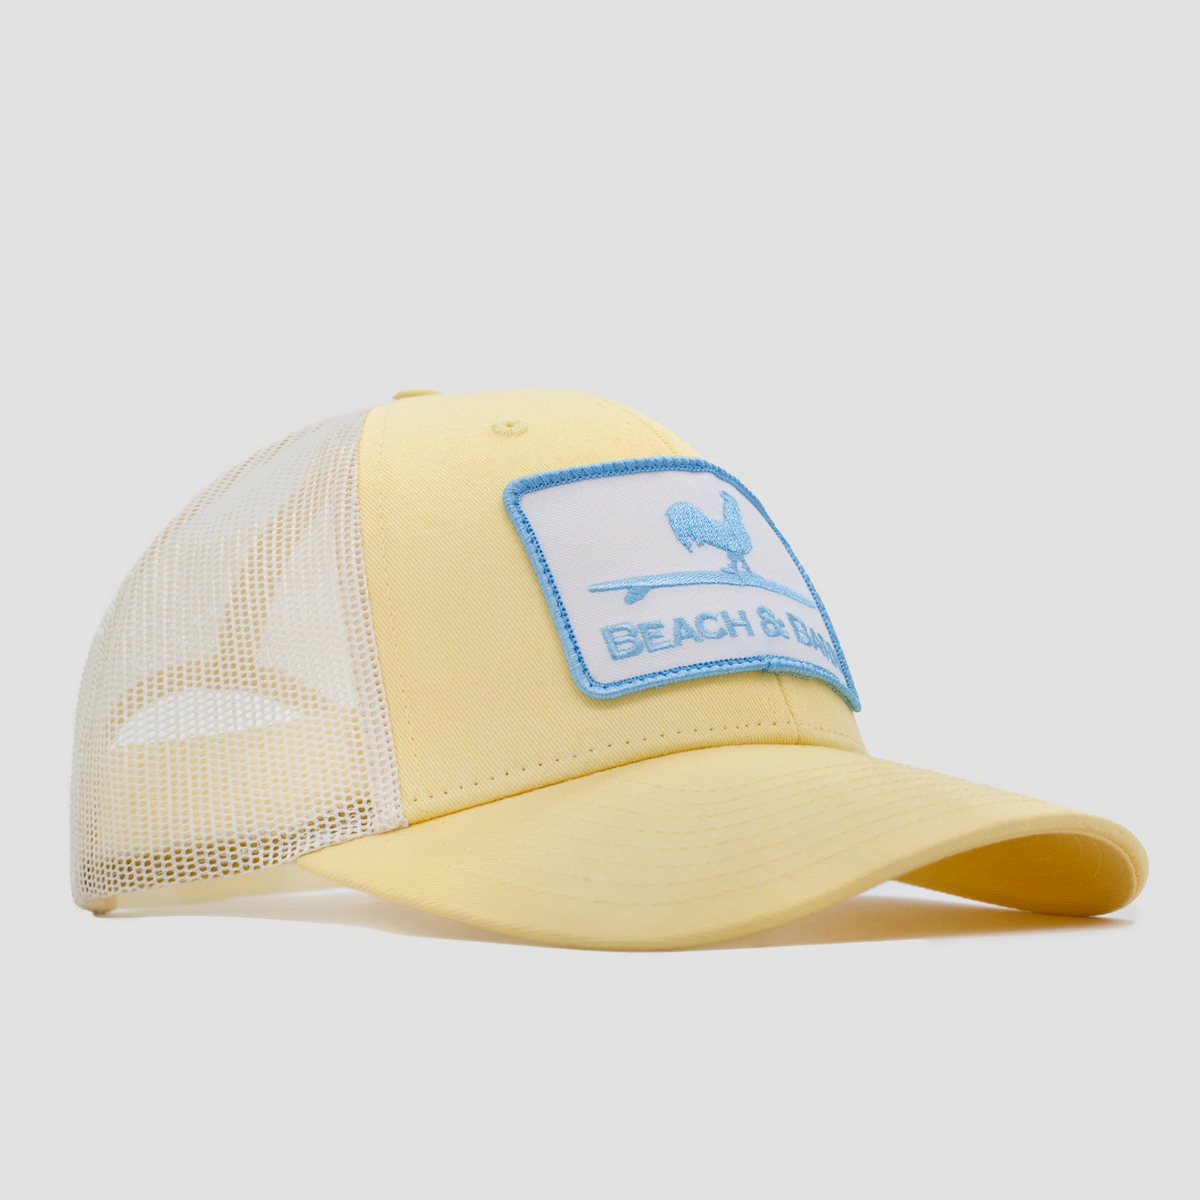 Cooler Medium Snapback Hat